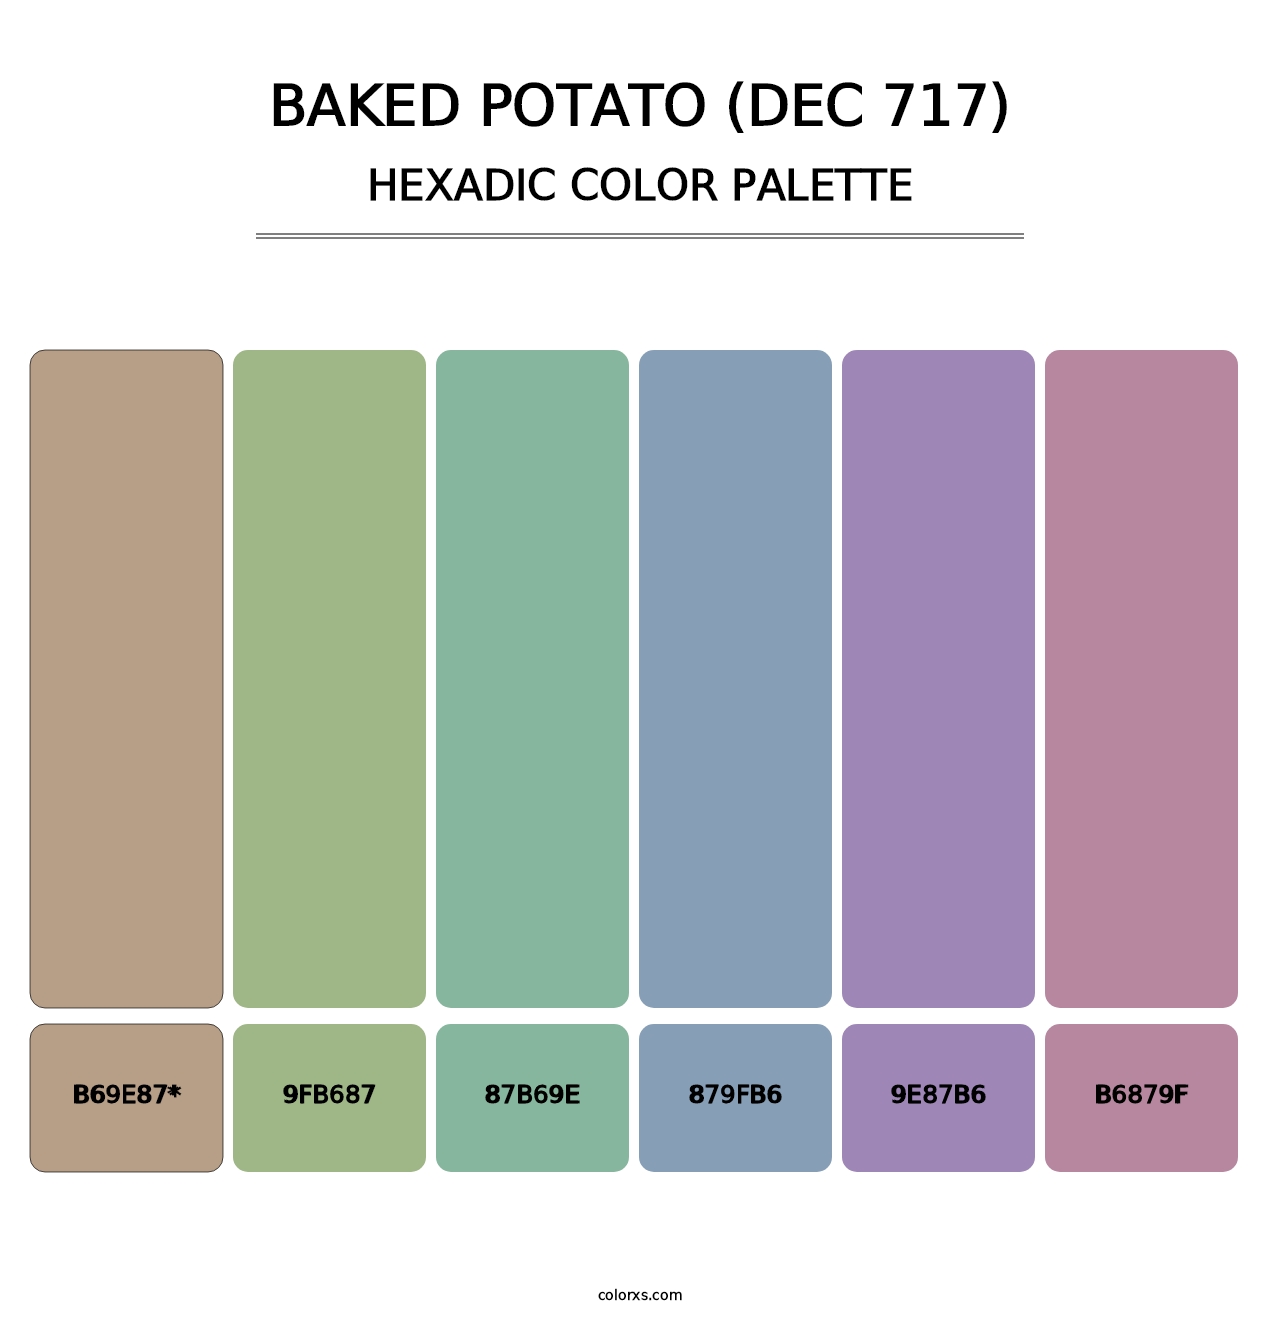 Baked Potato (DEC 717) - Hexadic Color Palette